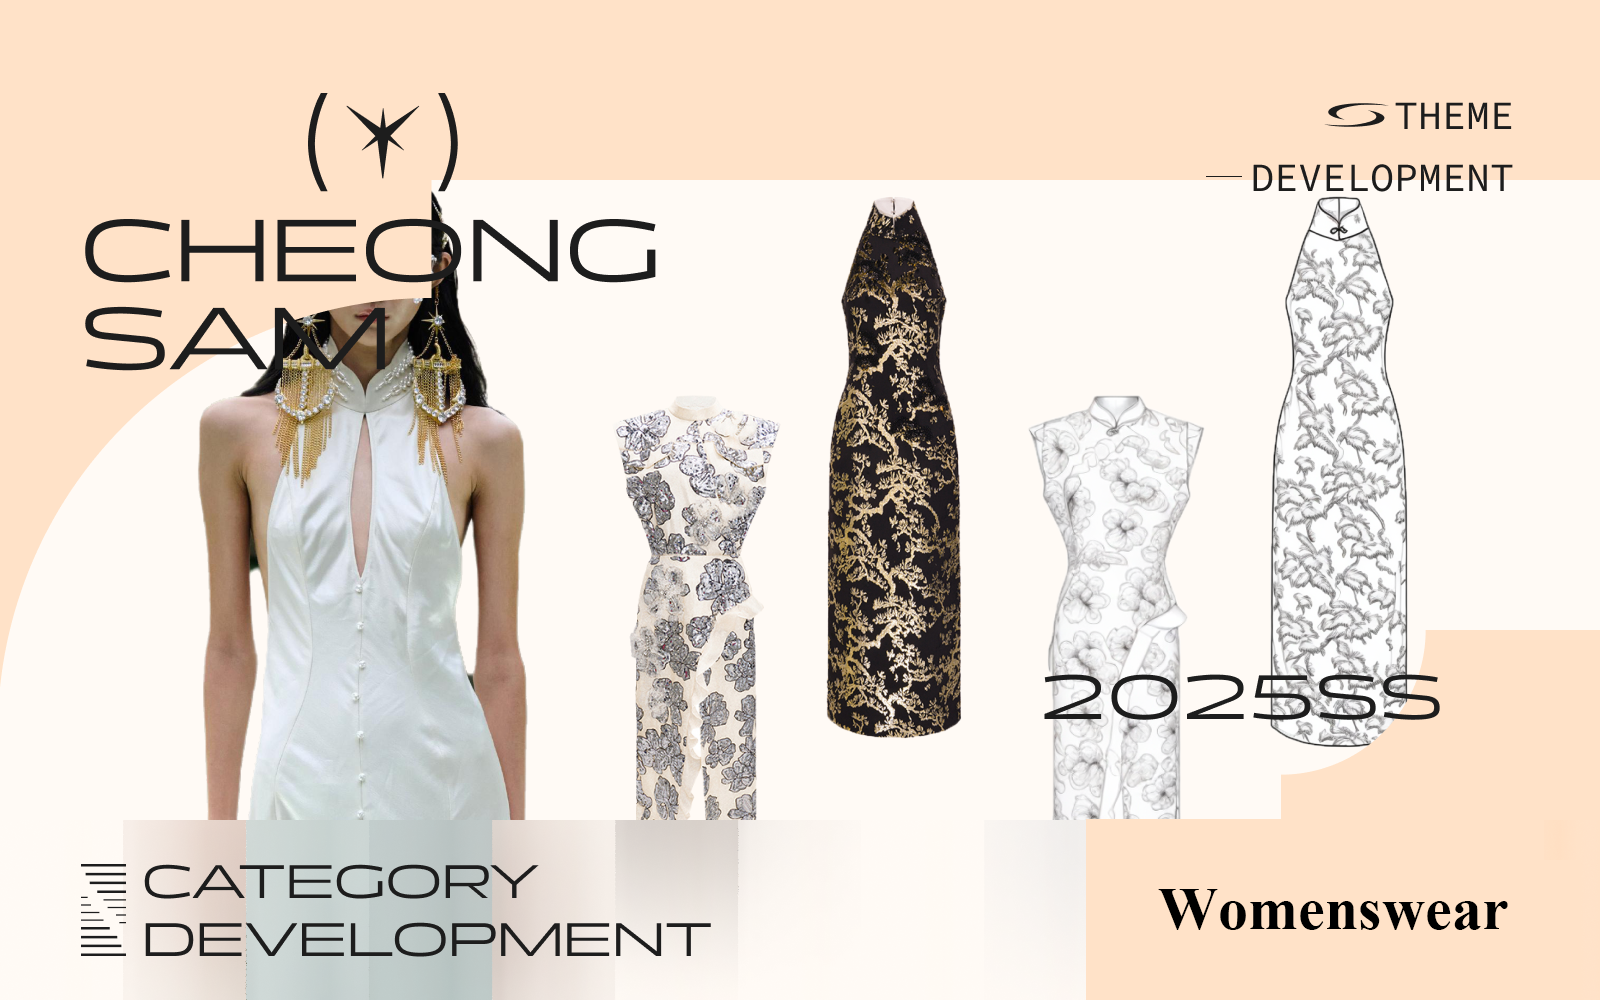 Cheongsam -- The Design Development of Womenswear